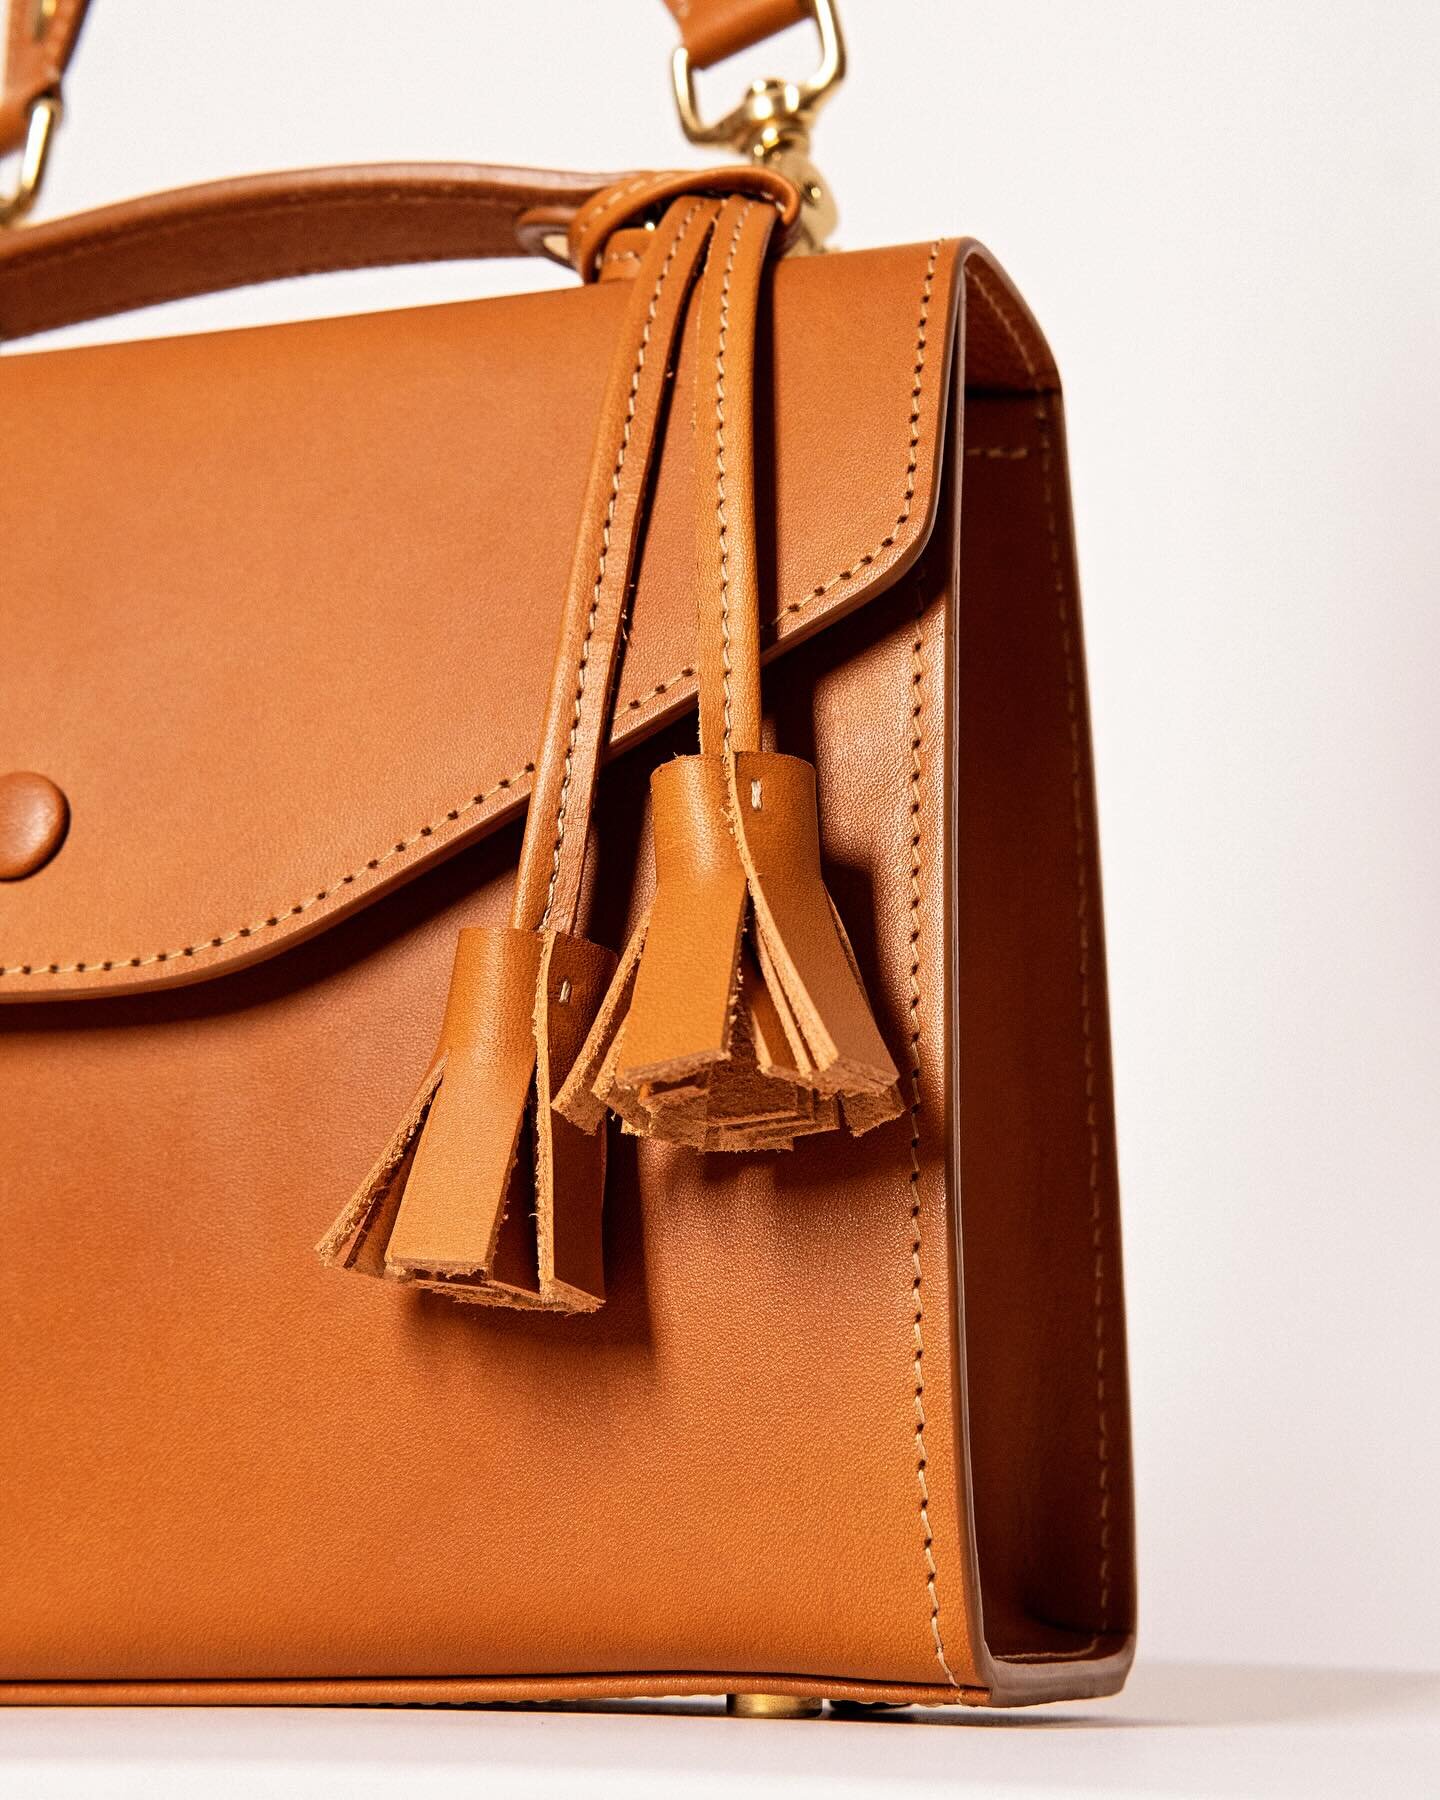 first time making leather charm👌🏻

#classic #classy #bag #leatherbag #urban #fashion #handcrafted #styleinspiration #black #design #essentials #minimal #minimalist #minimalstyle #style #ootd #instafashion #backtominimal #minimalhunter #handmade #ha